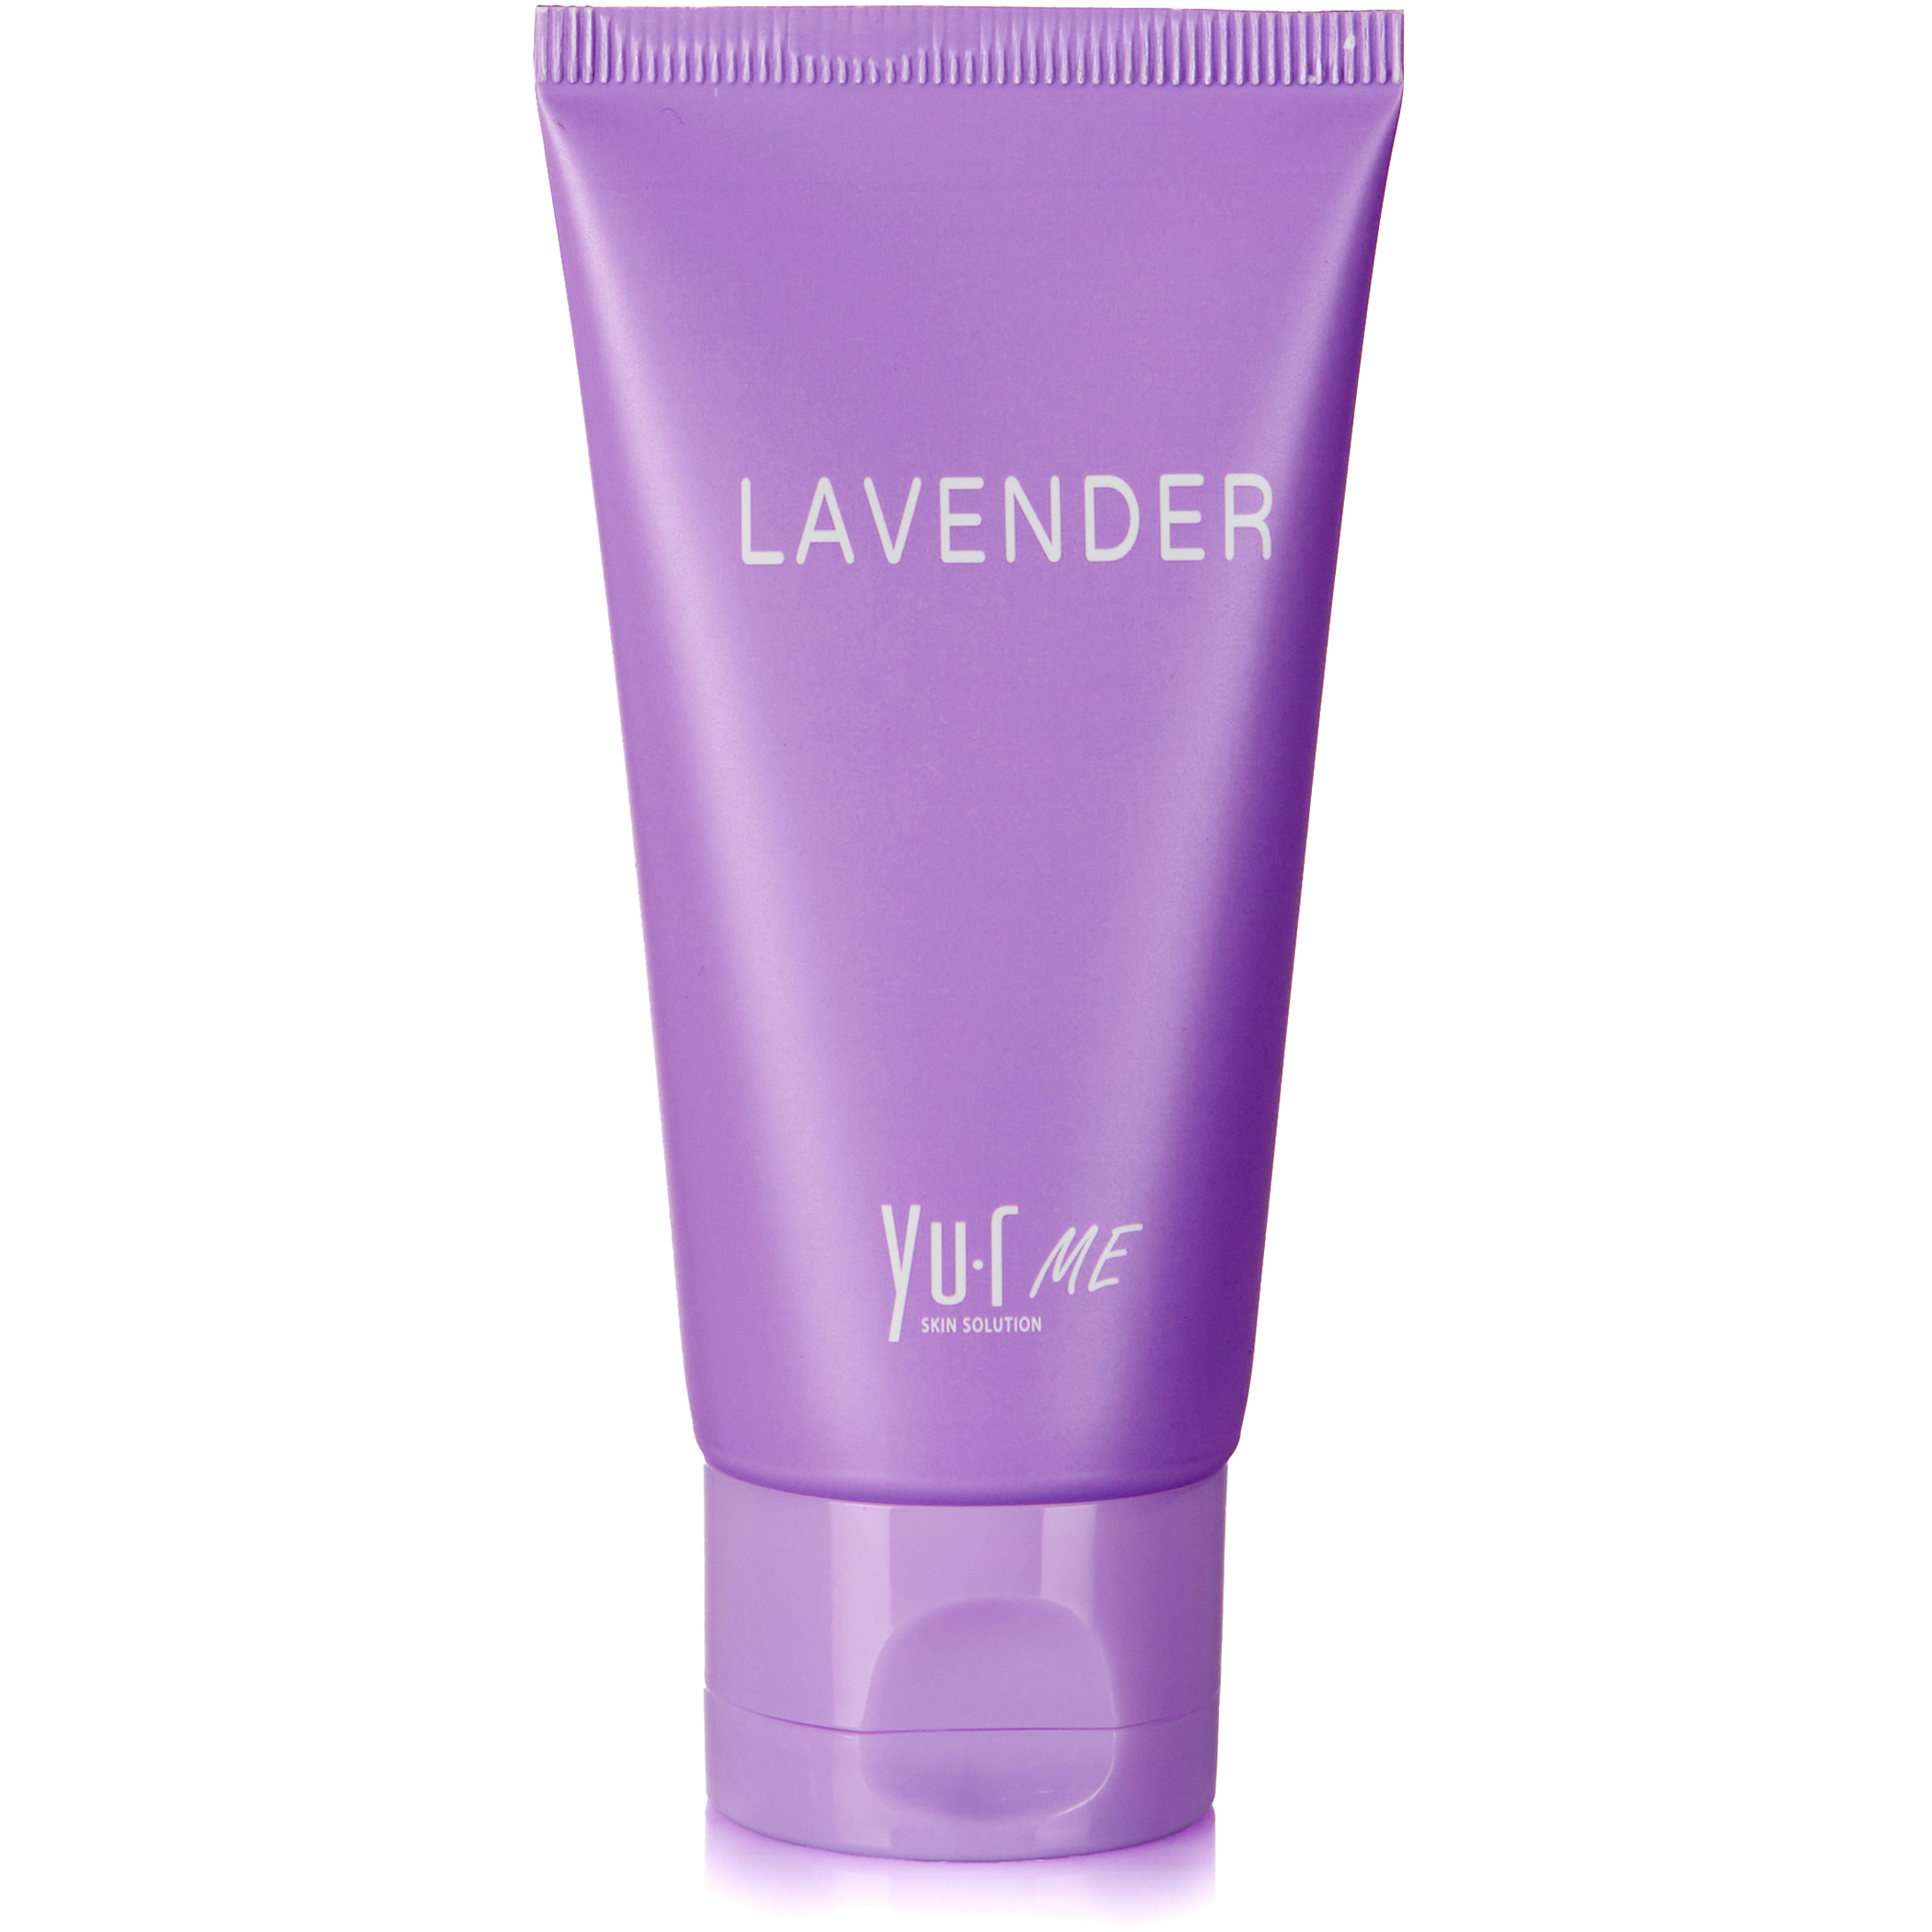 Крем для рук с экстрактом лаванды Yu.R Me Hand Cream Lavender, 50 мл zamotin manufactura lavender foot care крем для ног интенсивно увлажняющий с маслом лаванды 100